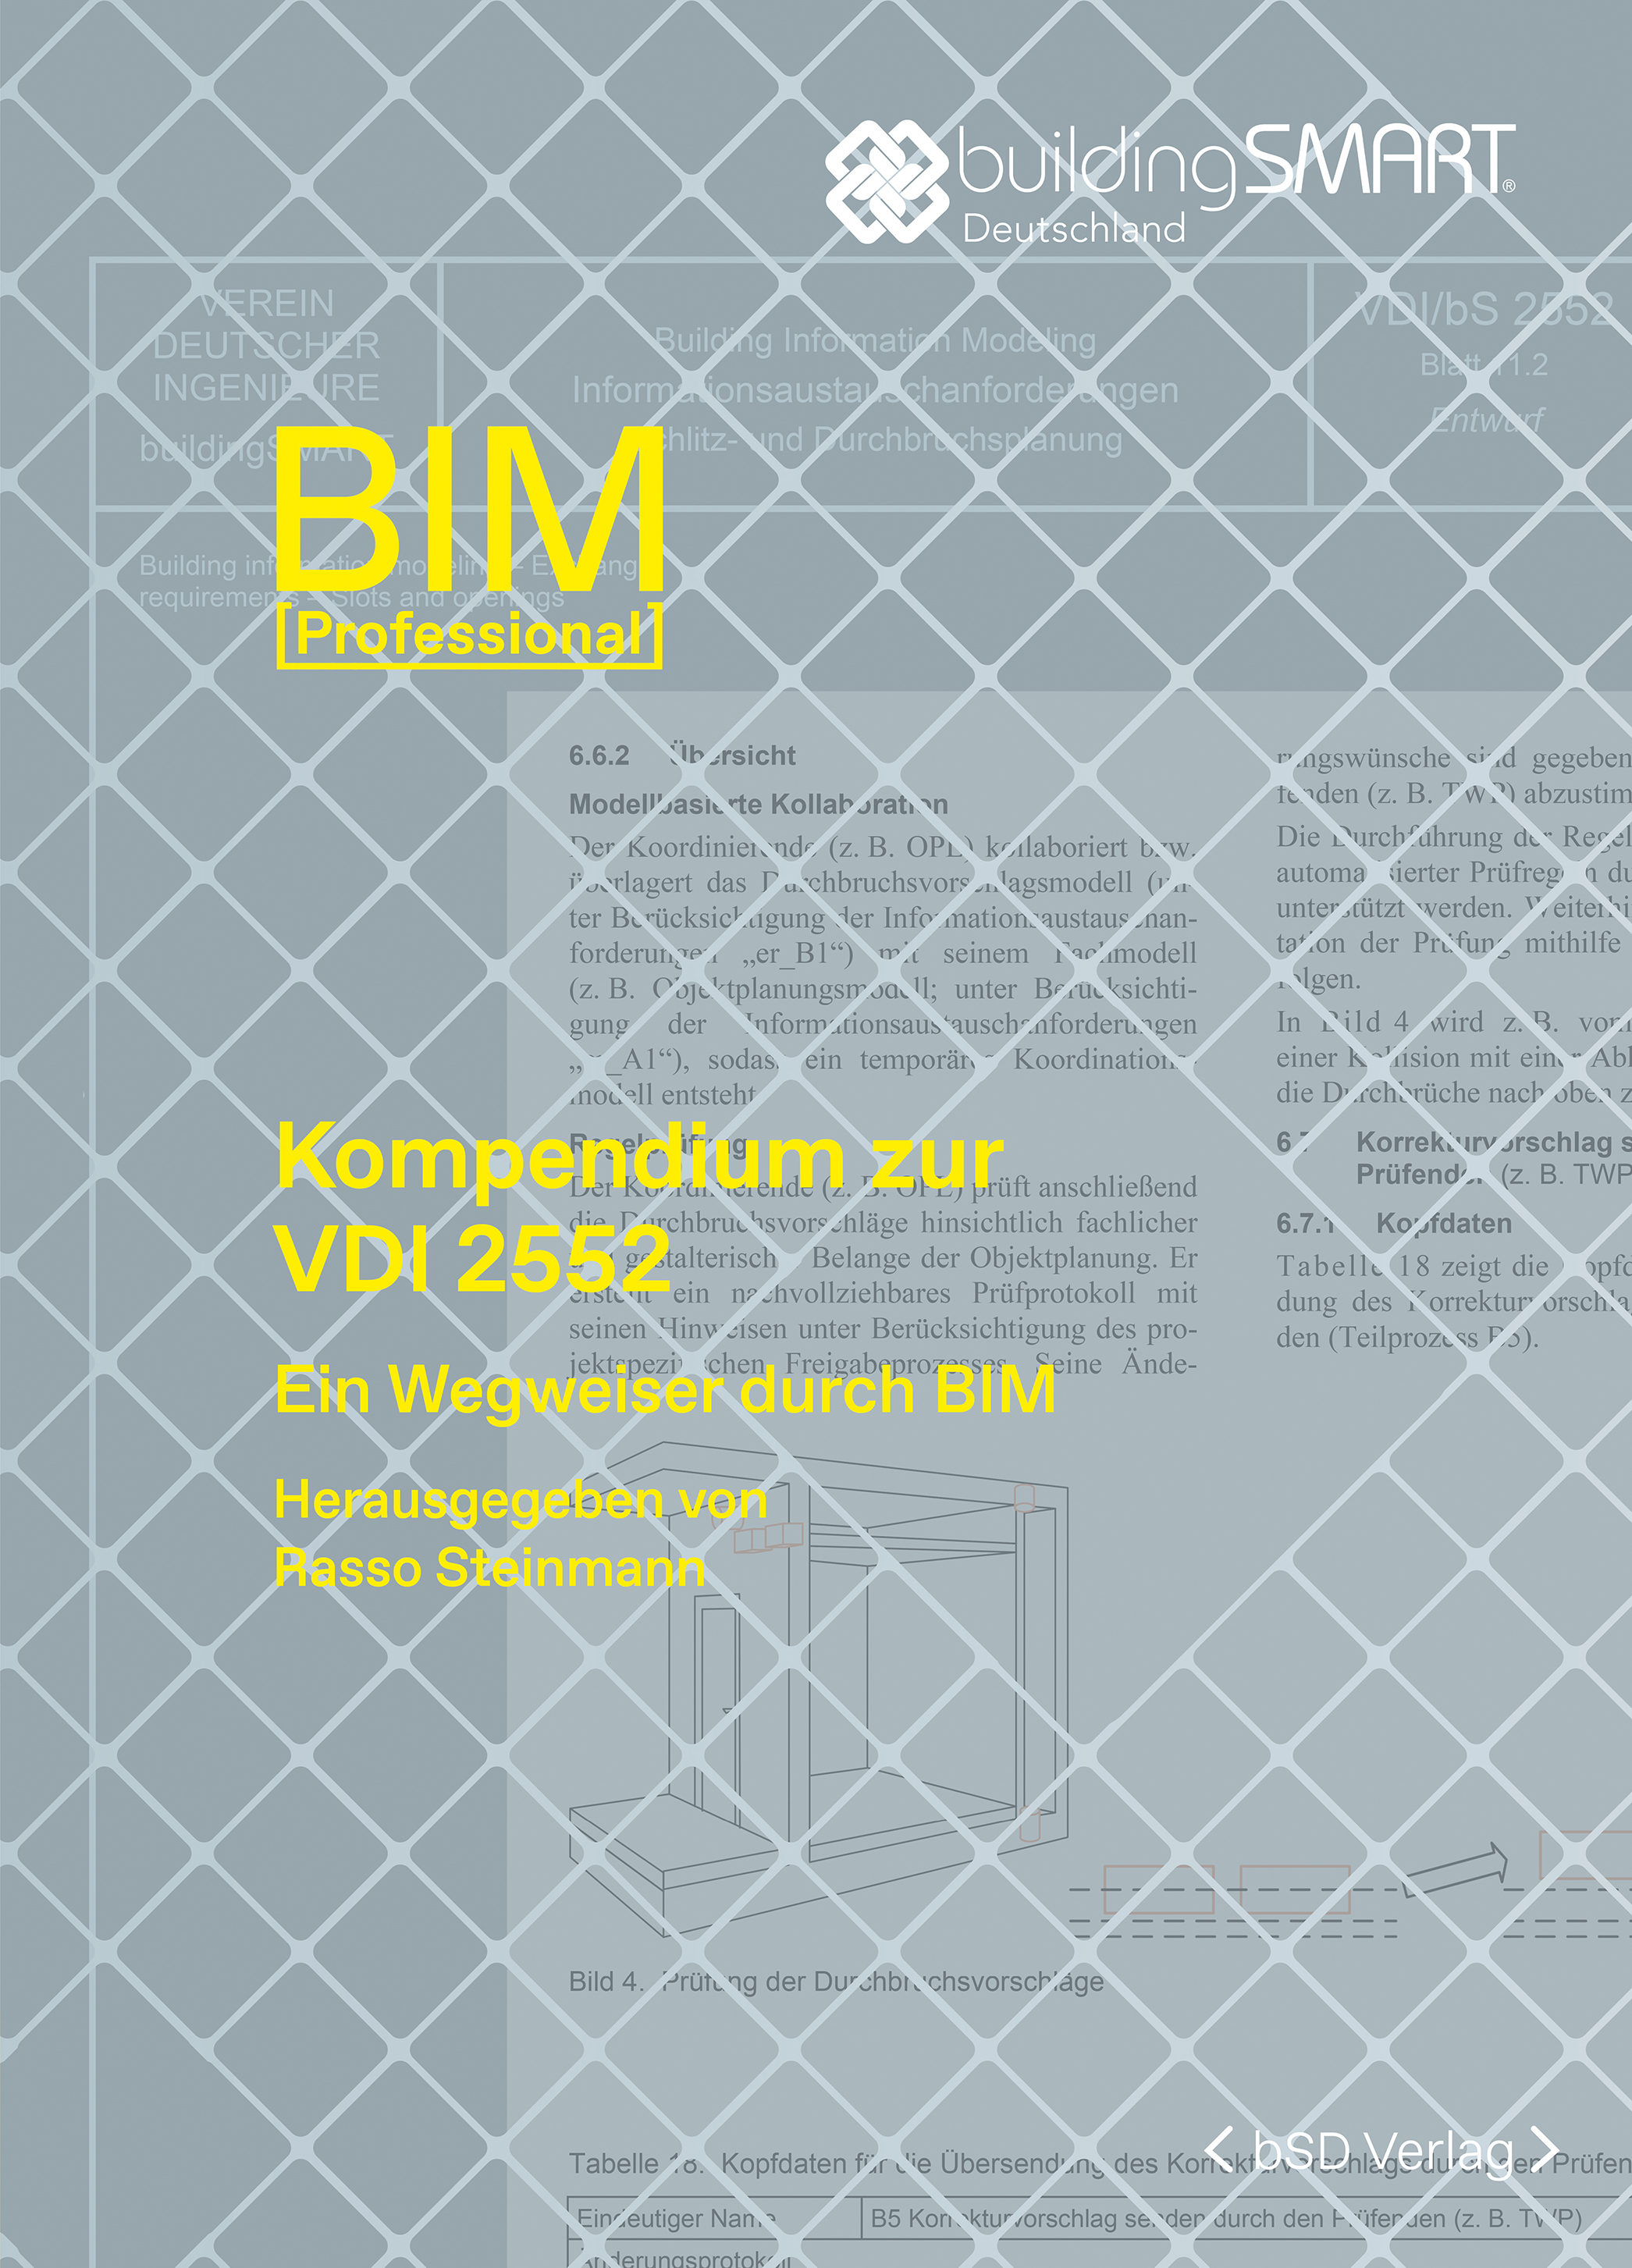 bSD Verlag/BIM Professional: Kompendium-VDI 2552